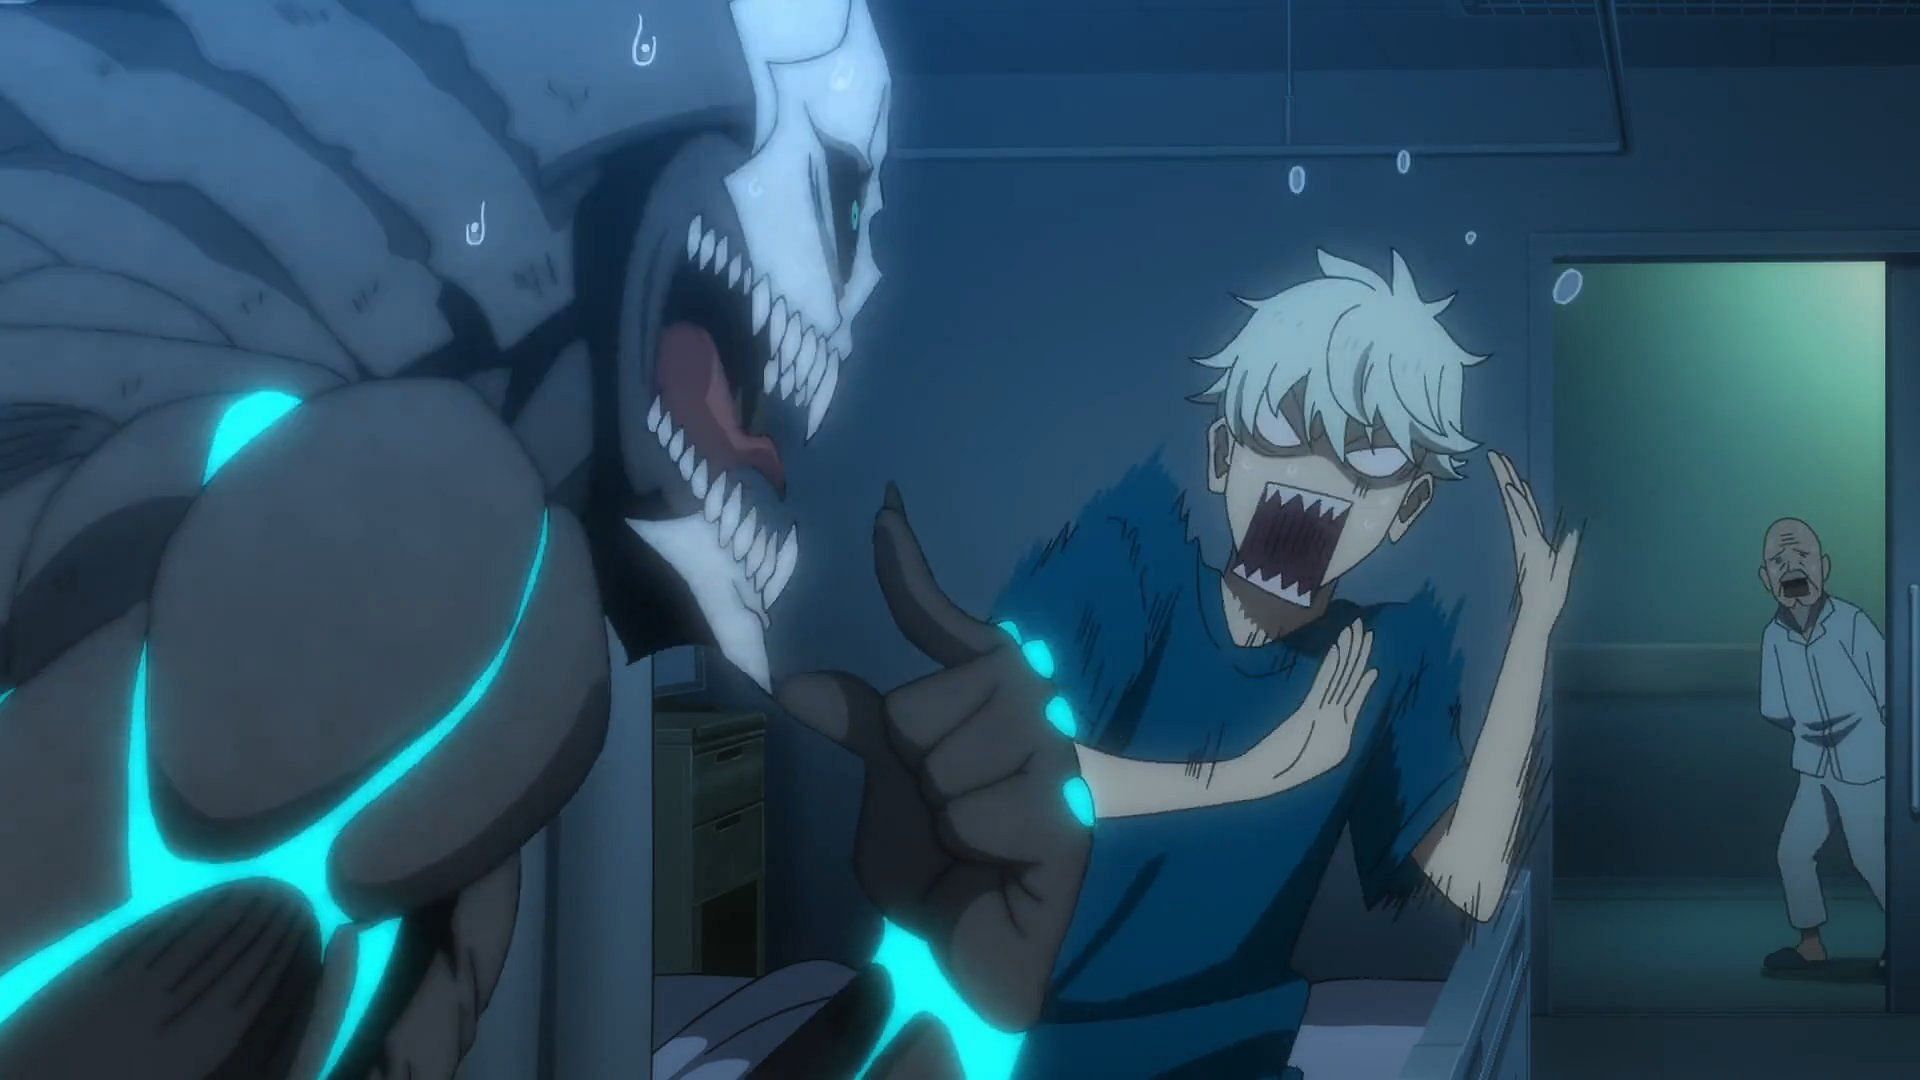 Kaiju No. 8 episode 3: Kafka and Ichikawa struggle in the second exam as Kikoru shines (Image via Production I.G)